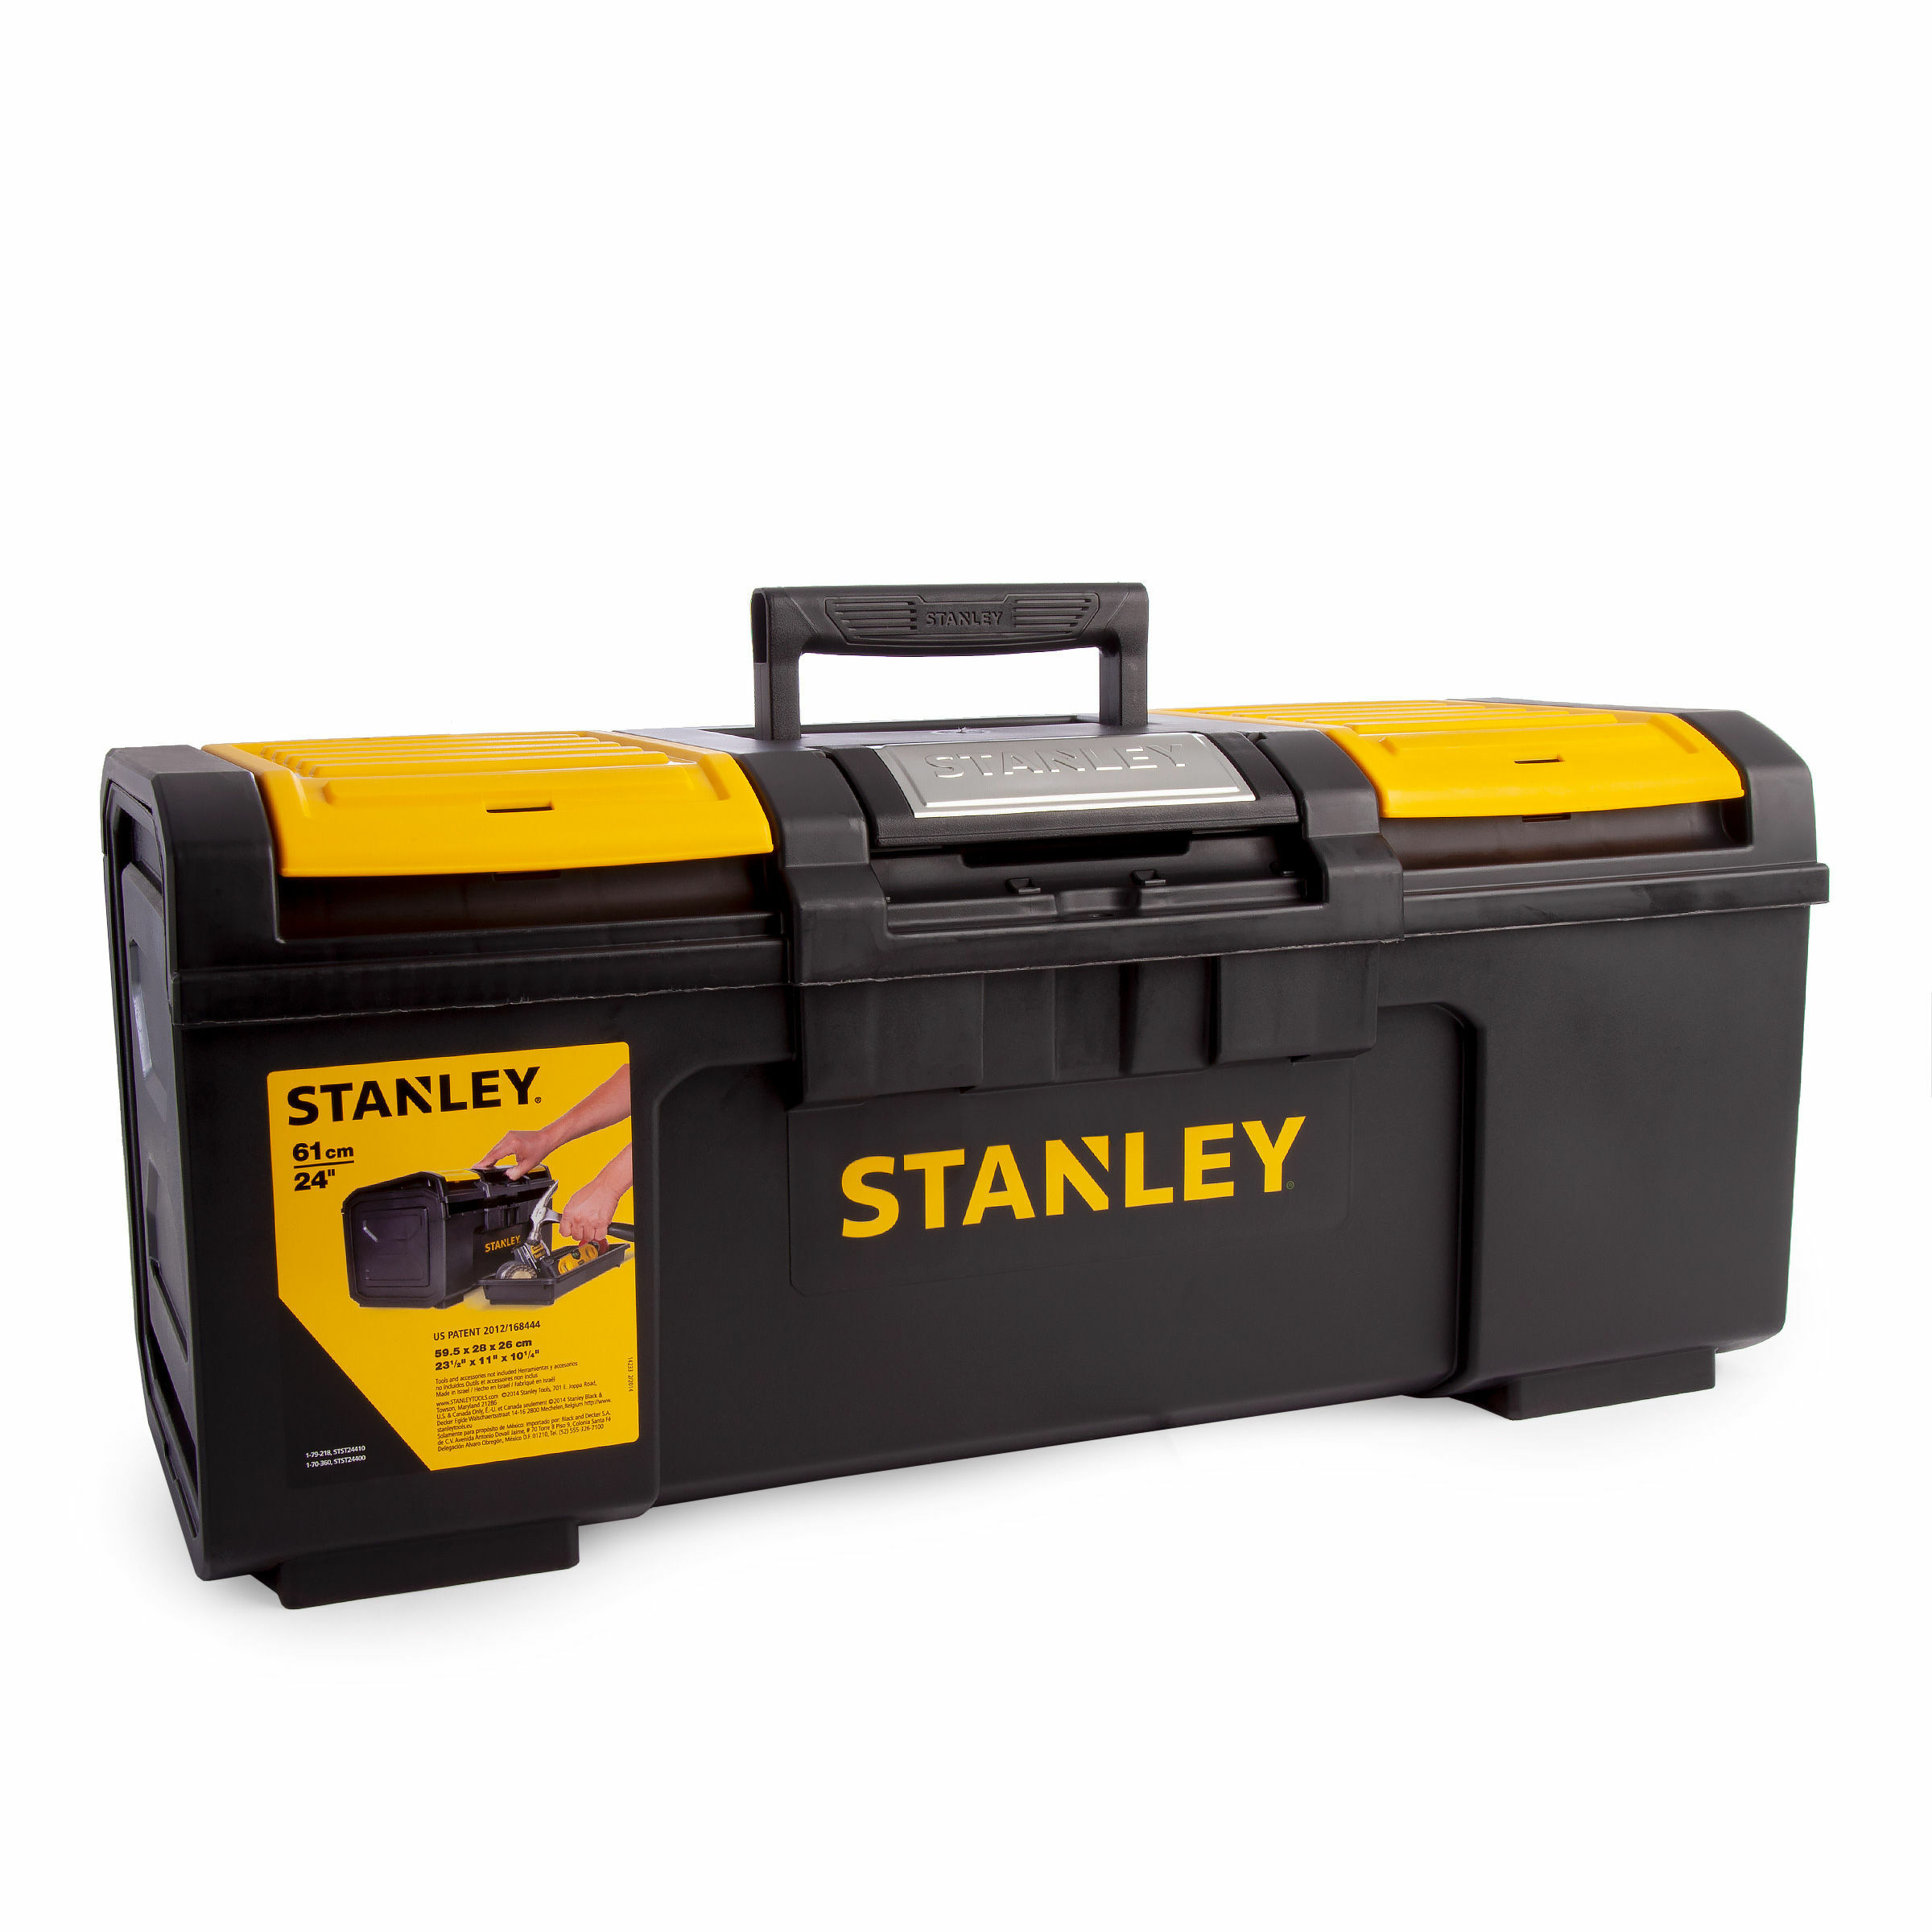 Basic Toolbox 24" Stanley - 1